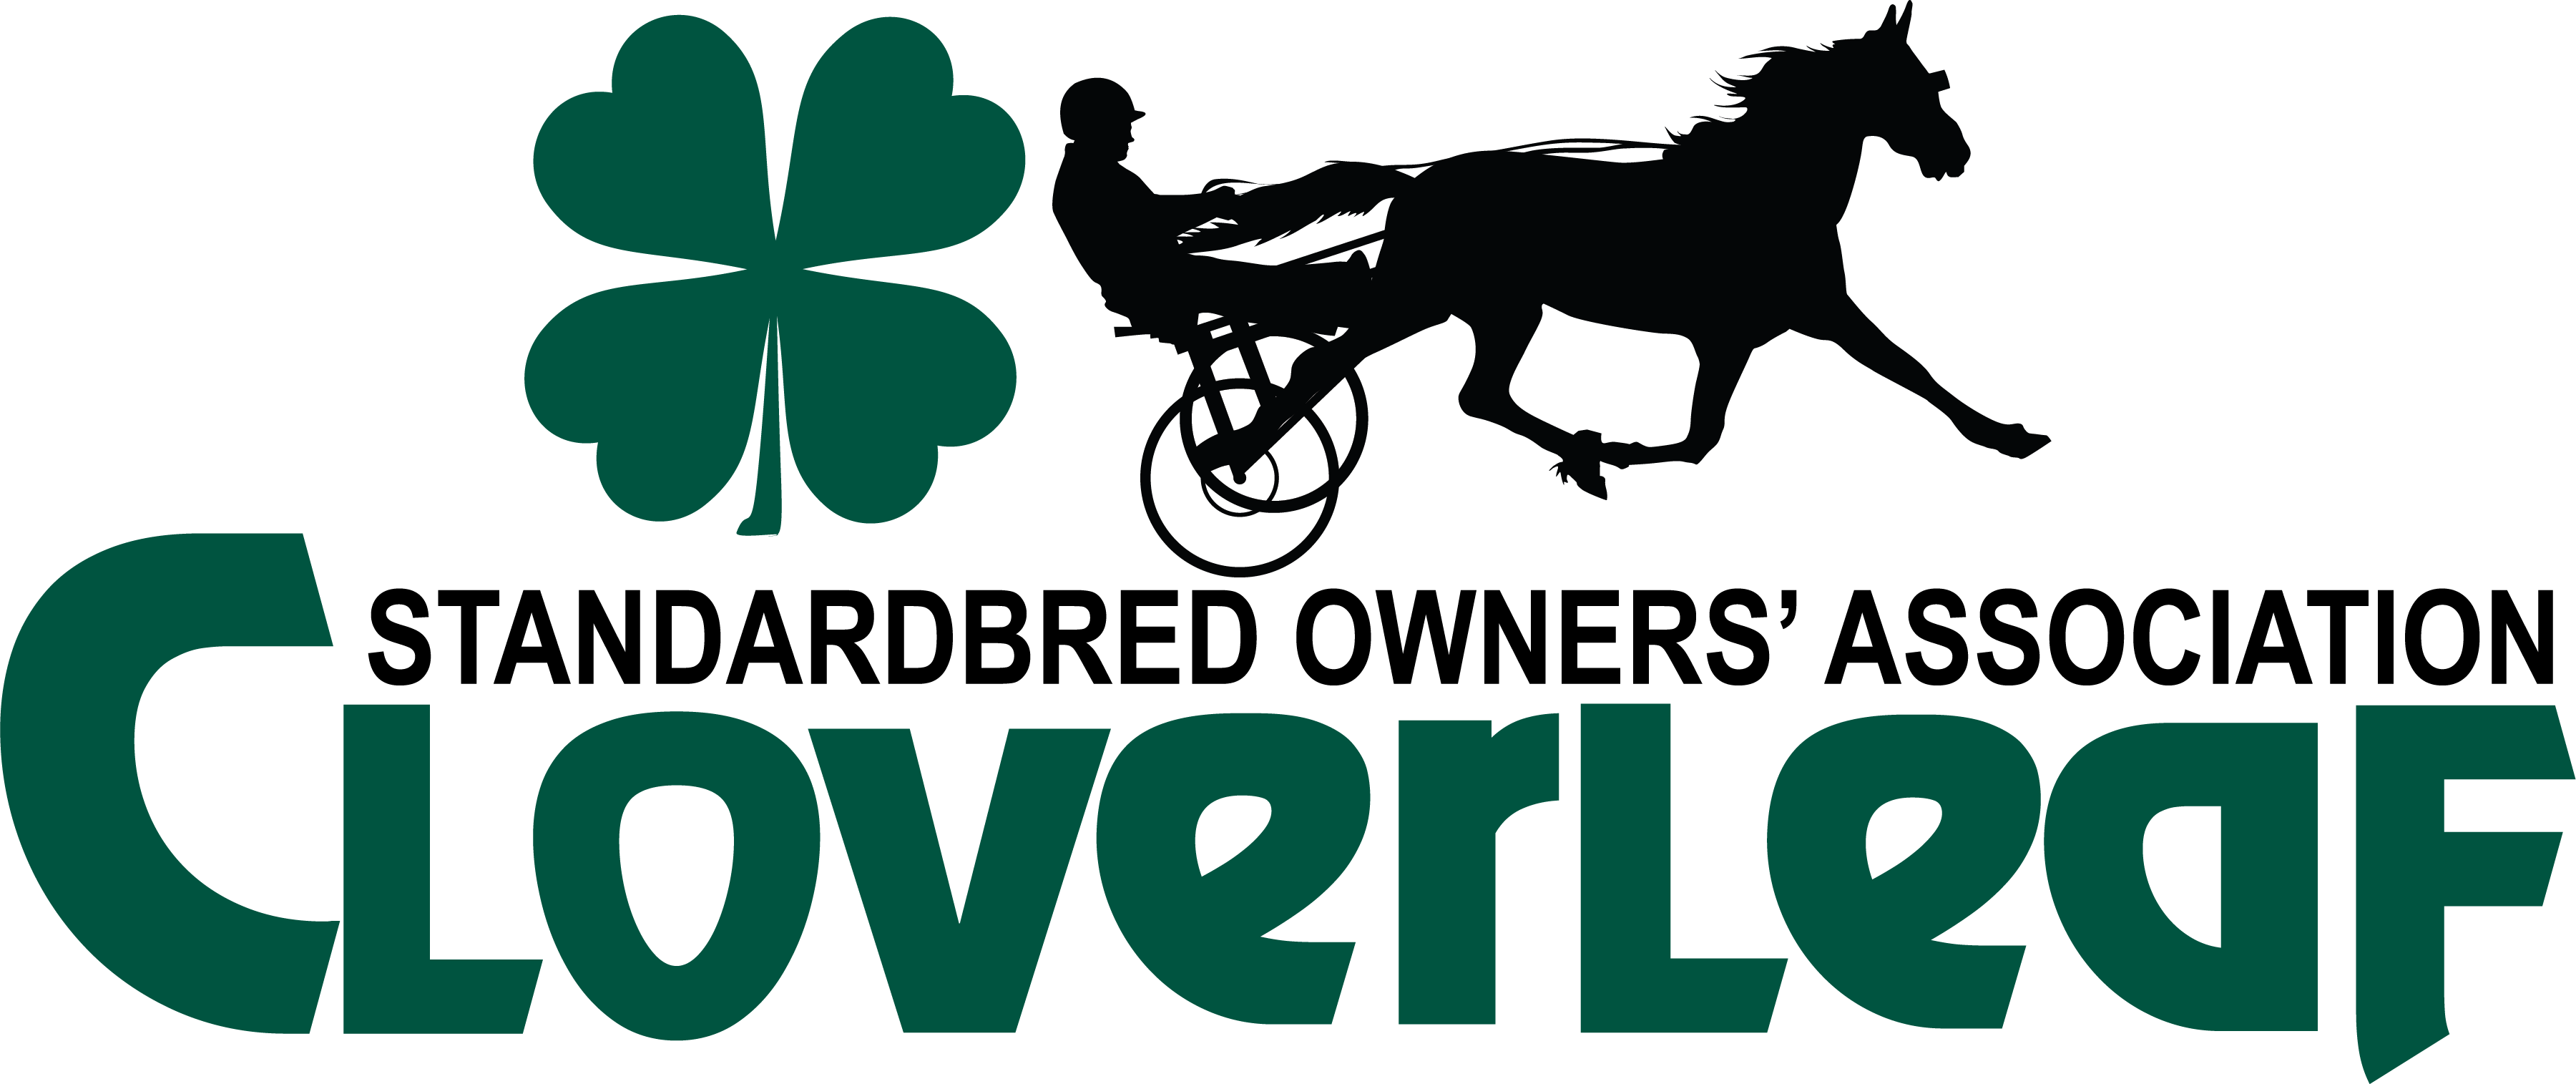 Cloverleaf Standardbred Owners' Association